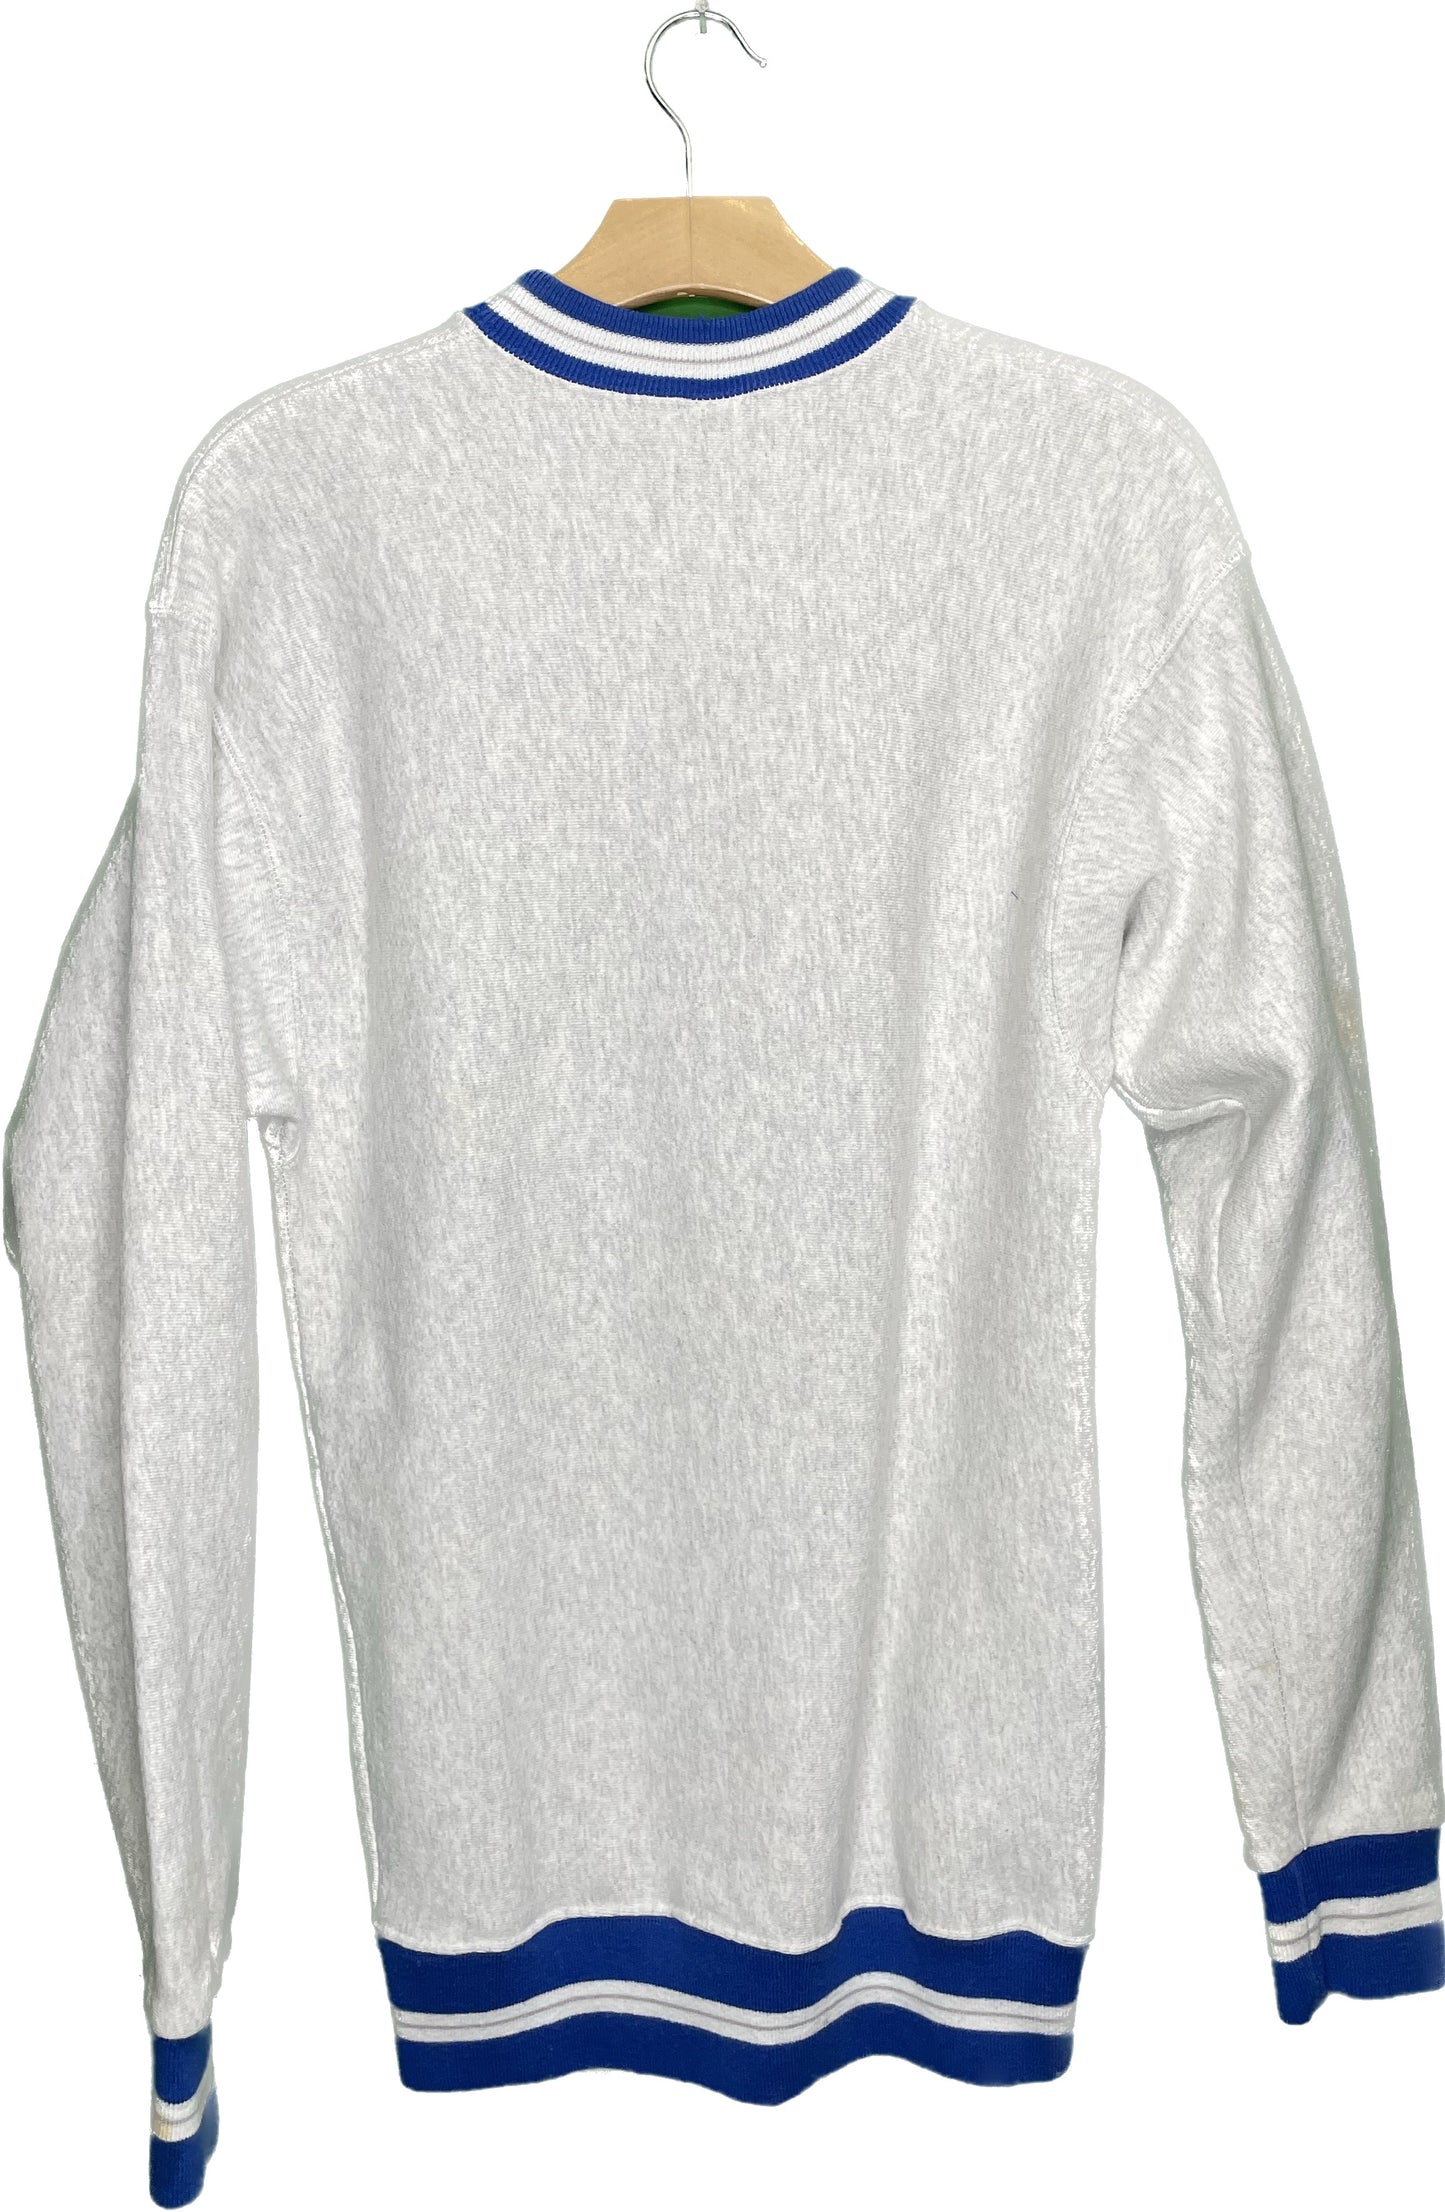 Vintage M Lions Embroidered Sweatshirt